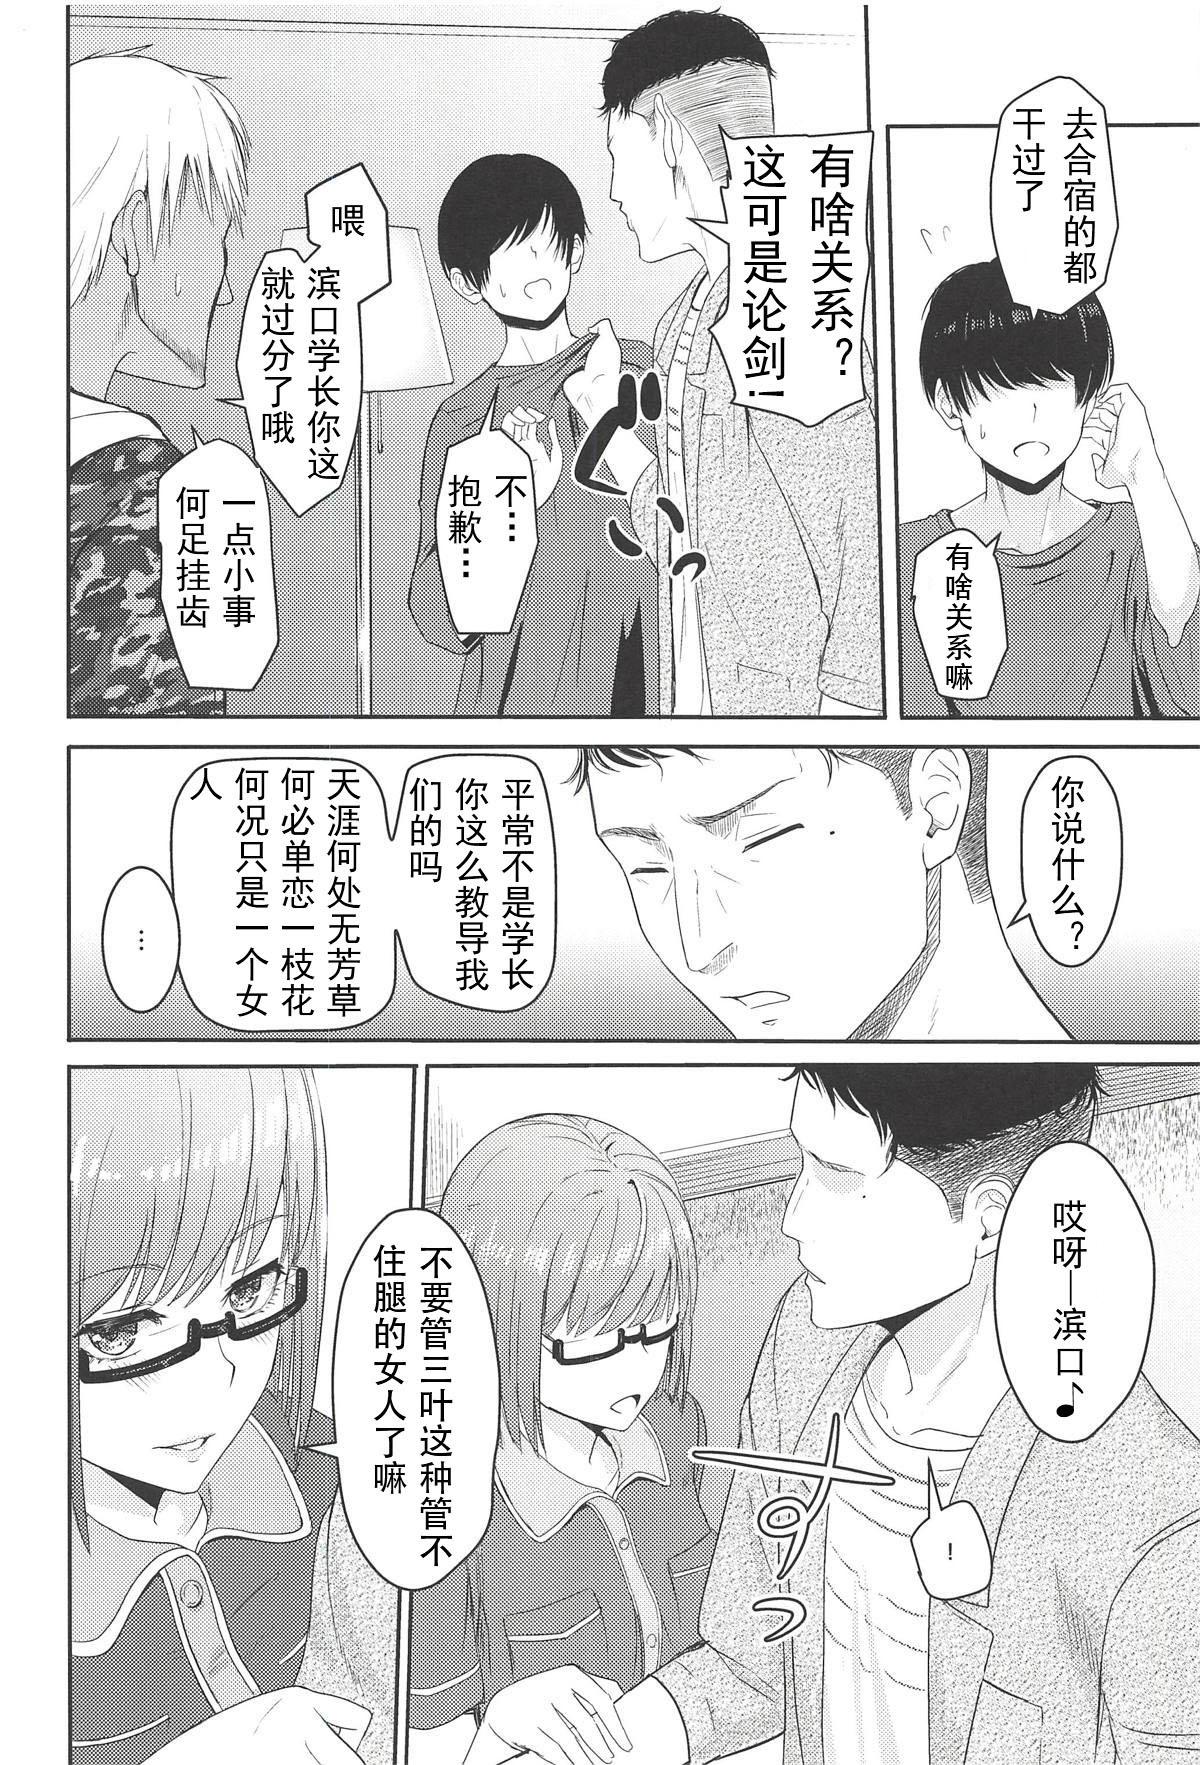 Spit Mitsuha - Kimi no na wa. Speculum - Page 5